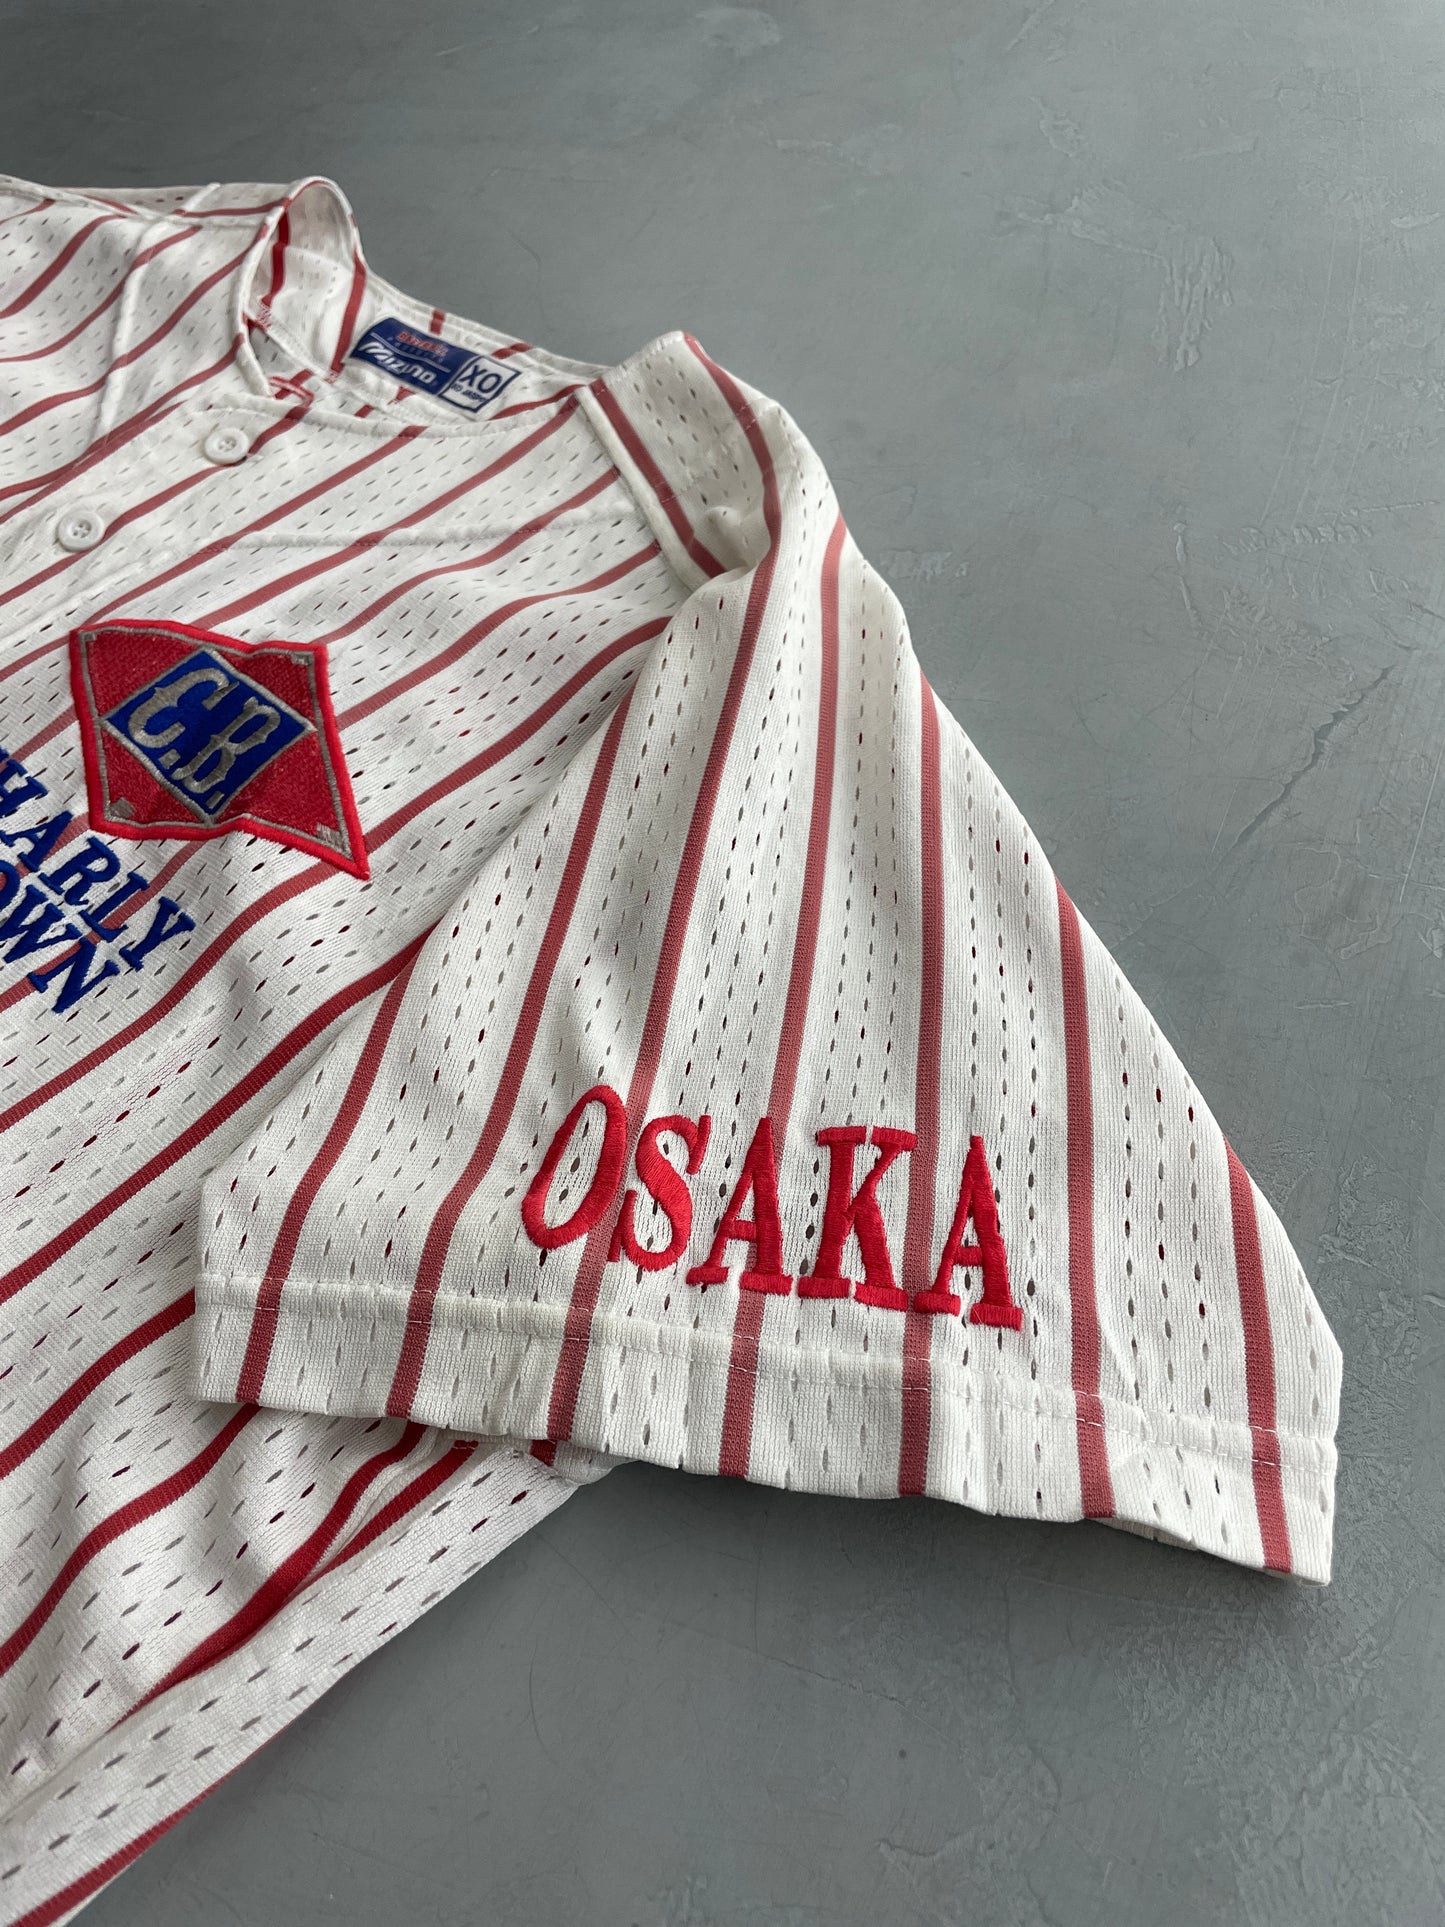 Charly Brown's Baseball Jersey [XL]